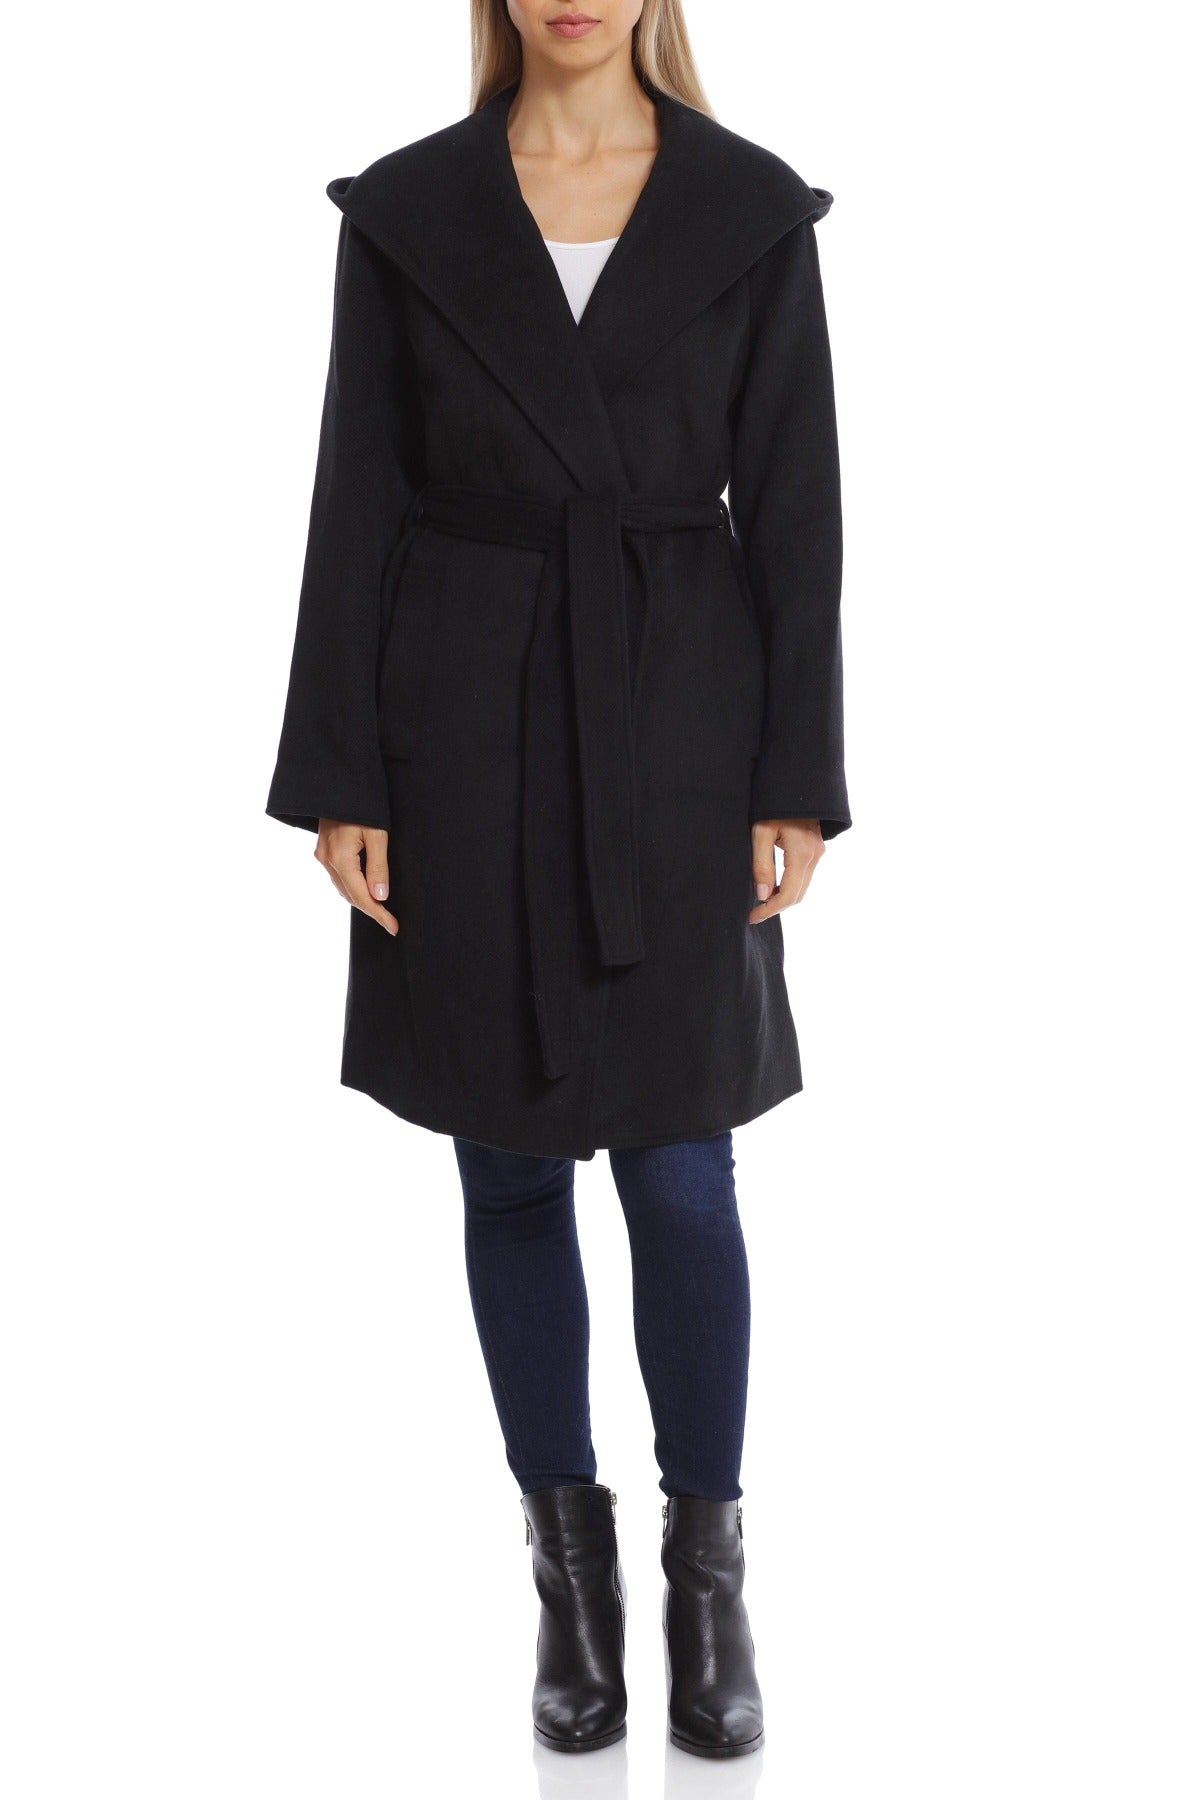 Black hooded wool-blend belted midi coat jacket - figure flattering Fall coats jackets for women